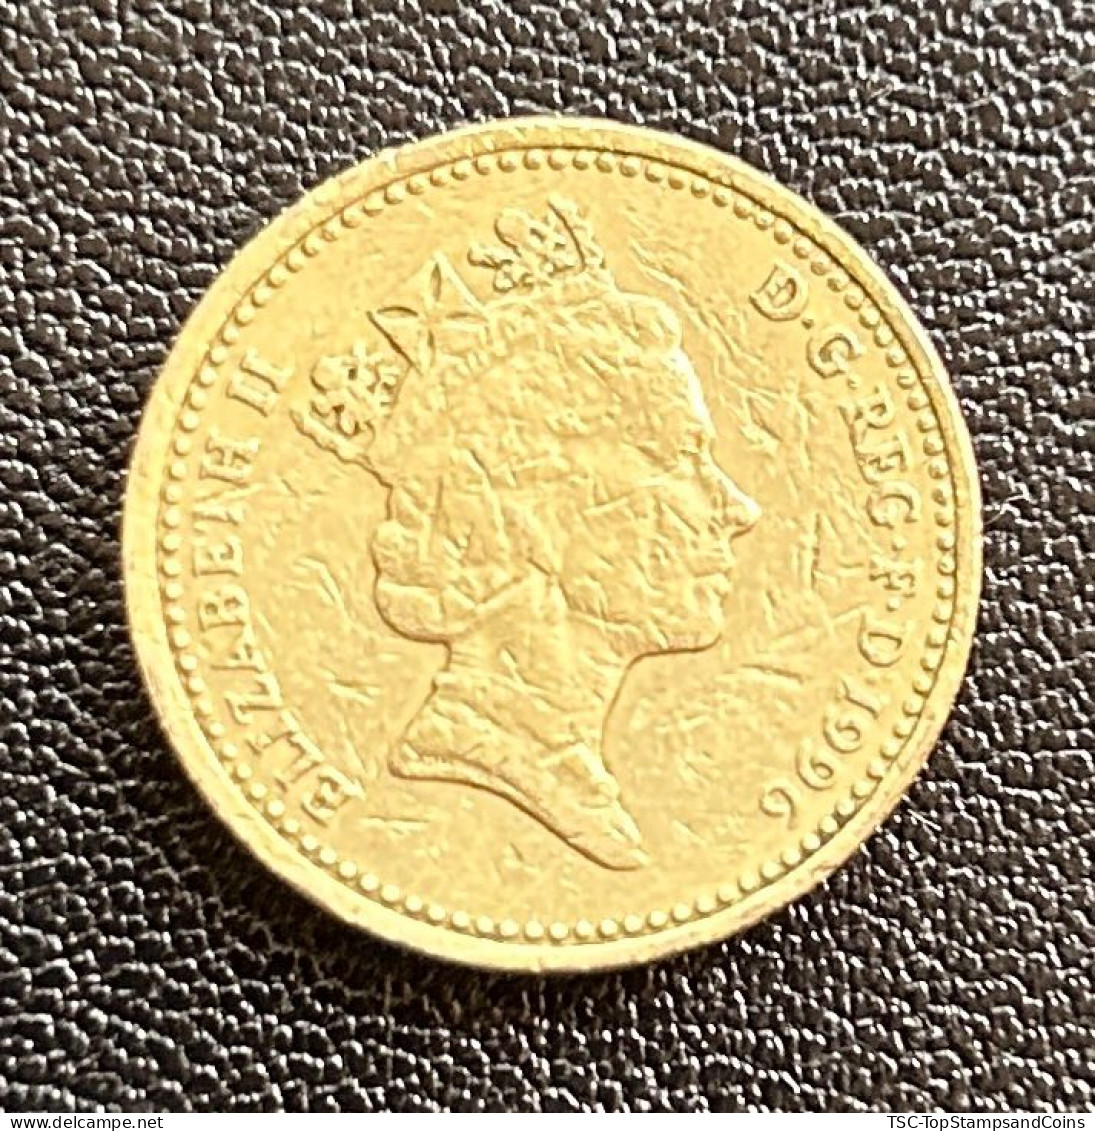 $$GB896 - Queen Elizabeth II - 1 Pound Coin - 3rd Portrait - Celtic Cross - Great-Britain - 1996 - 1 Pond